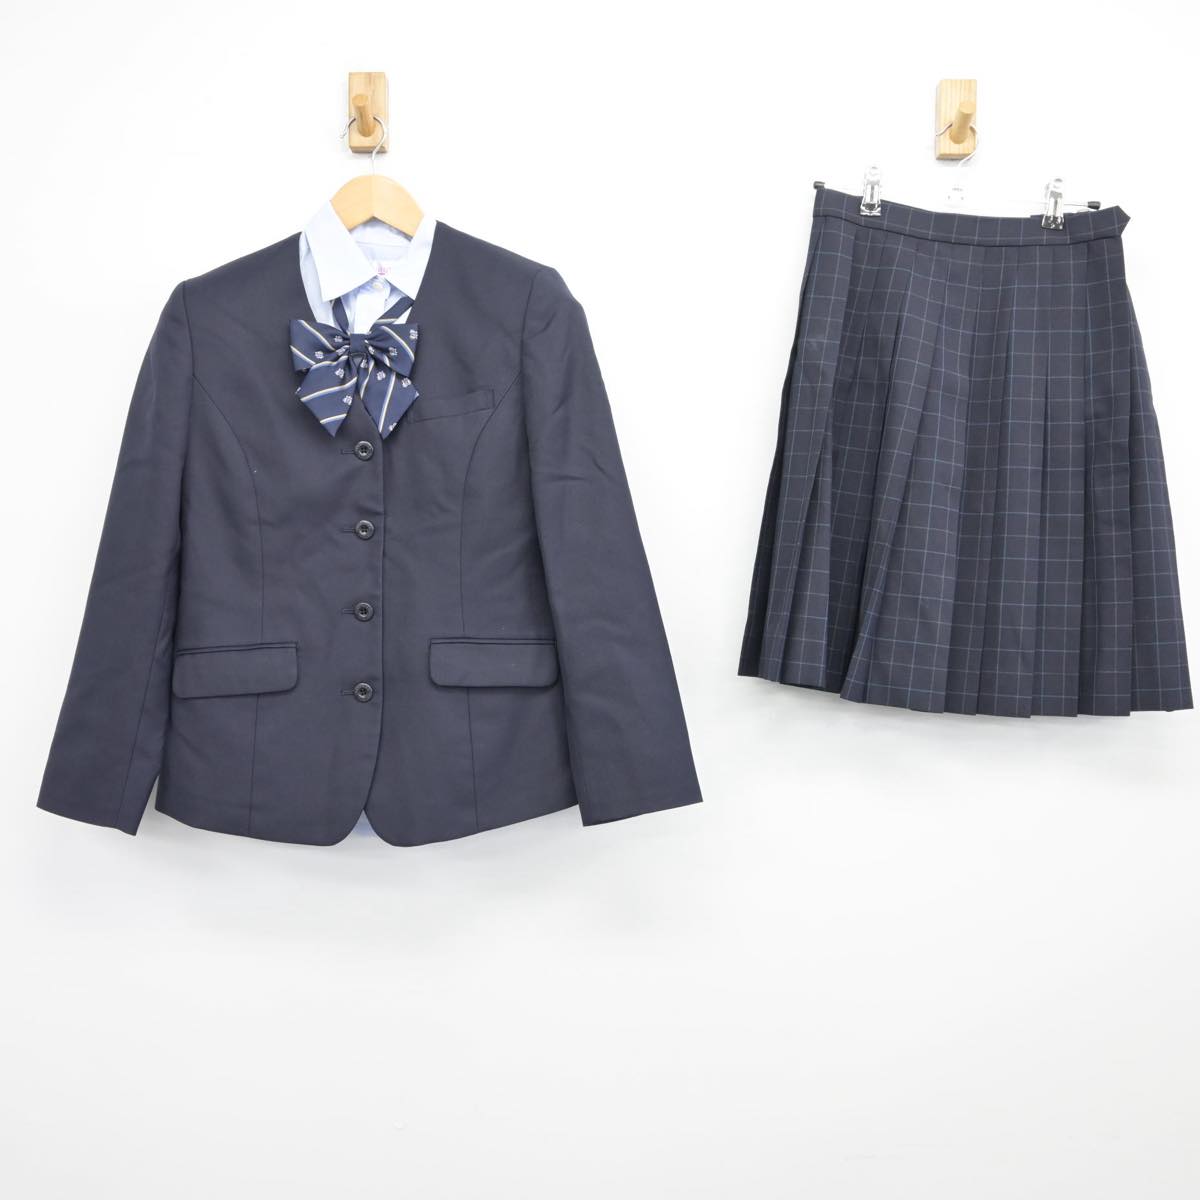 公立 女子 制服 セット 中学 高校 神奈川県 横浜市 - コスプレ